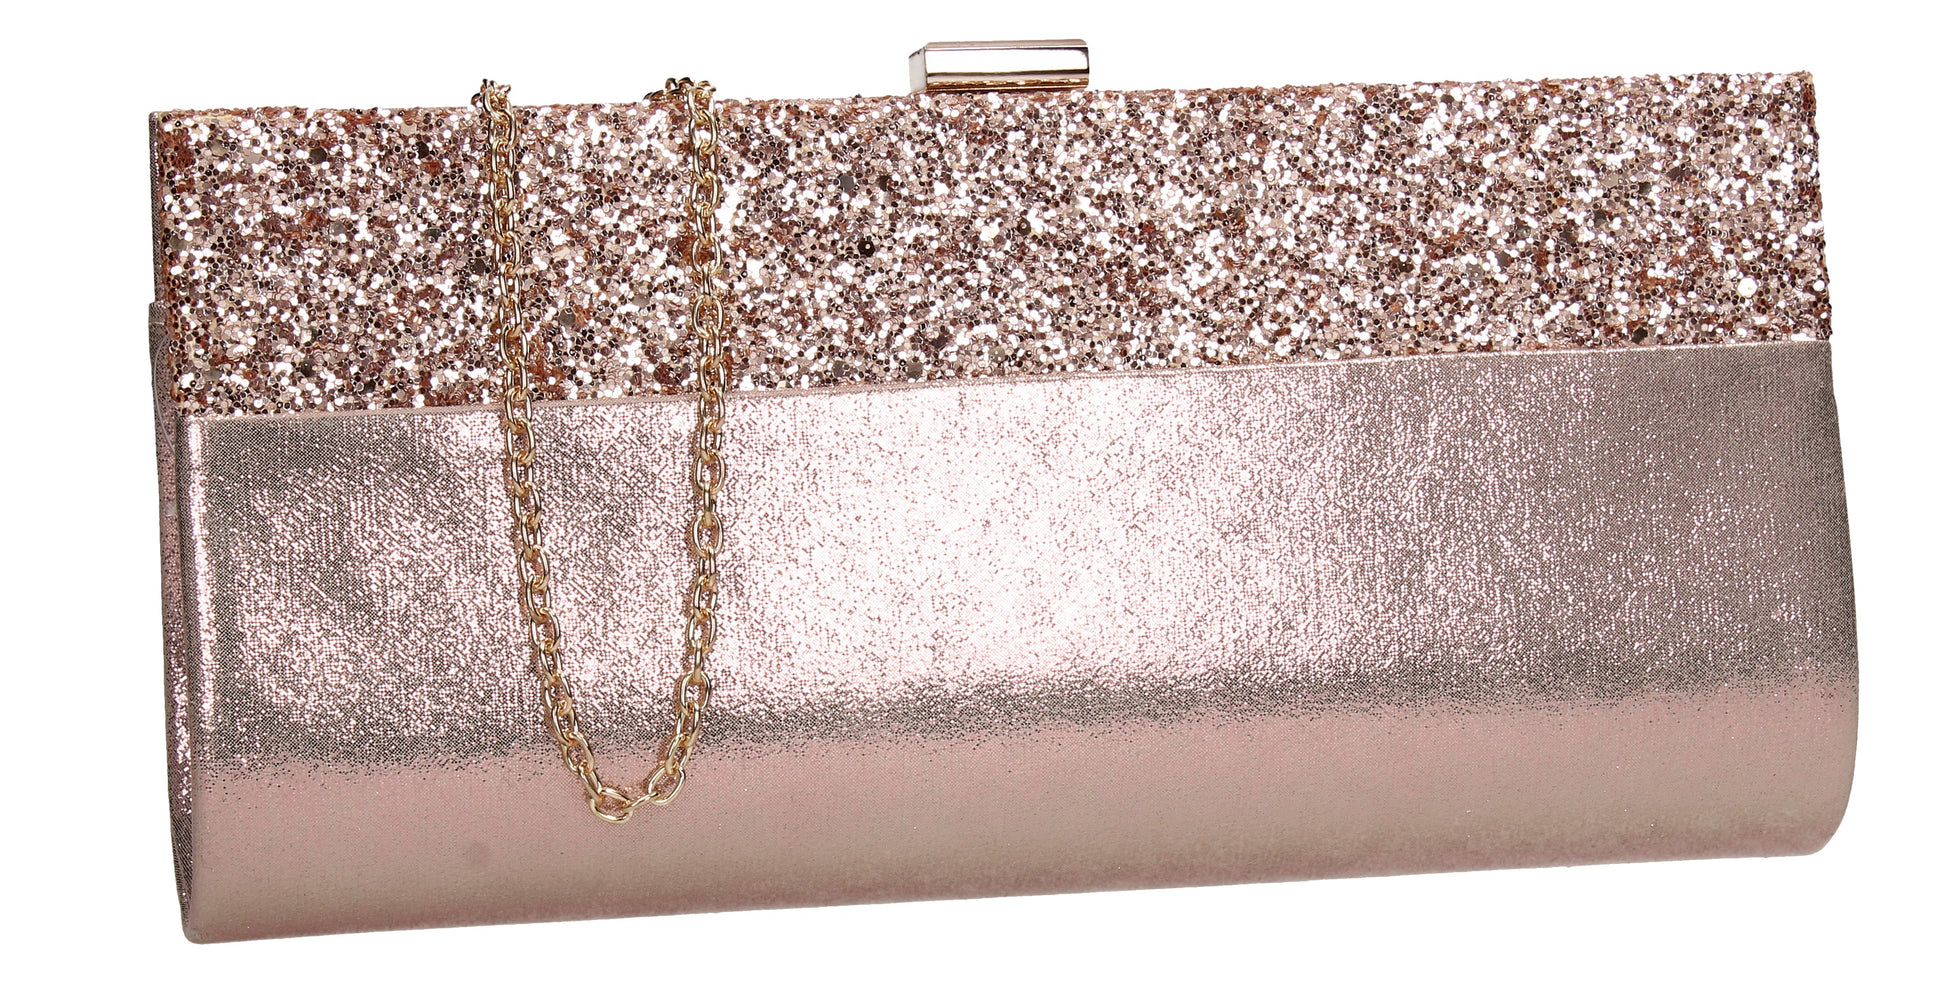 SWANKYSWANS Kathy Glitter Clutch Bag Champagne Cute Cheap Clutch Bag For Weddings School and Work